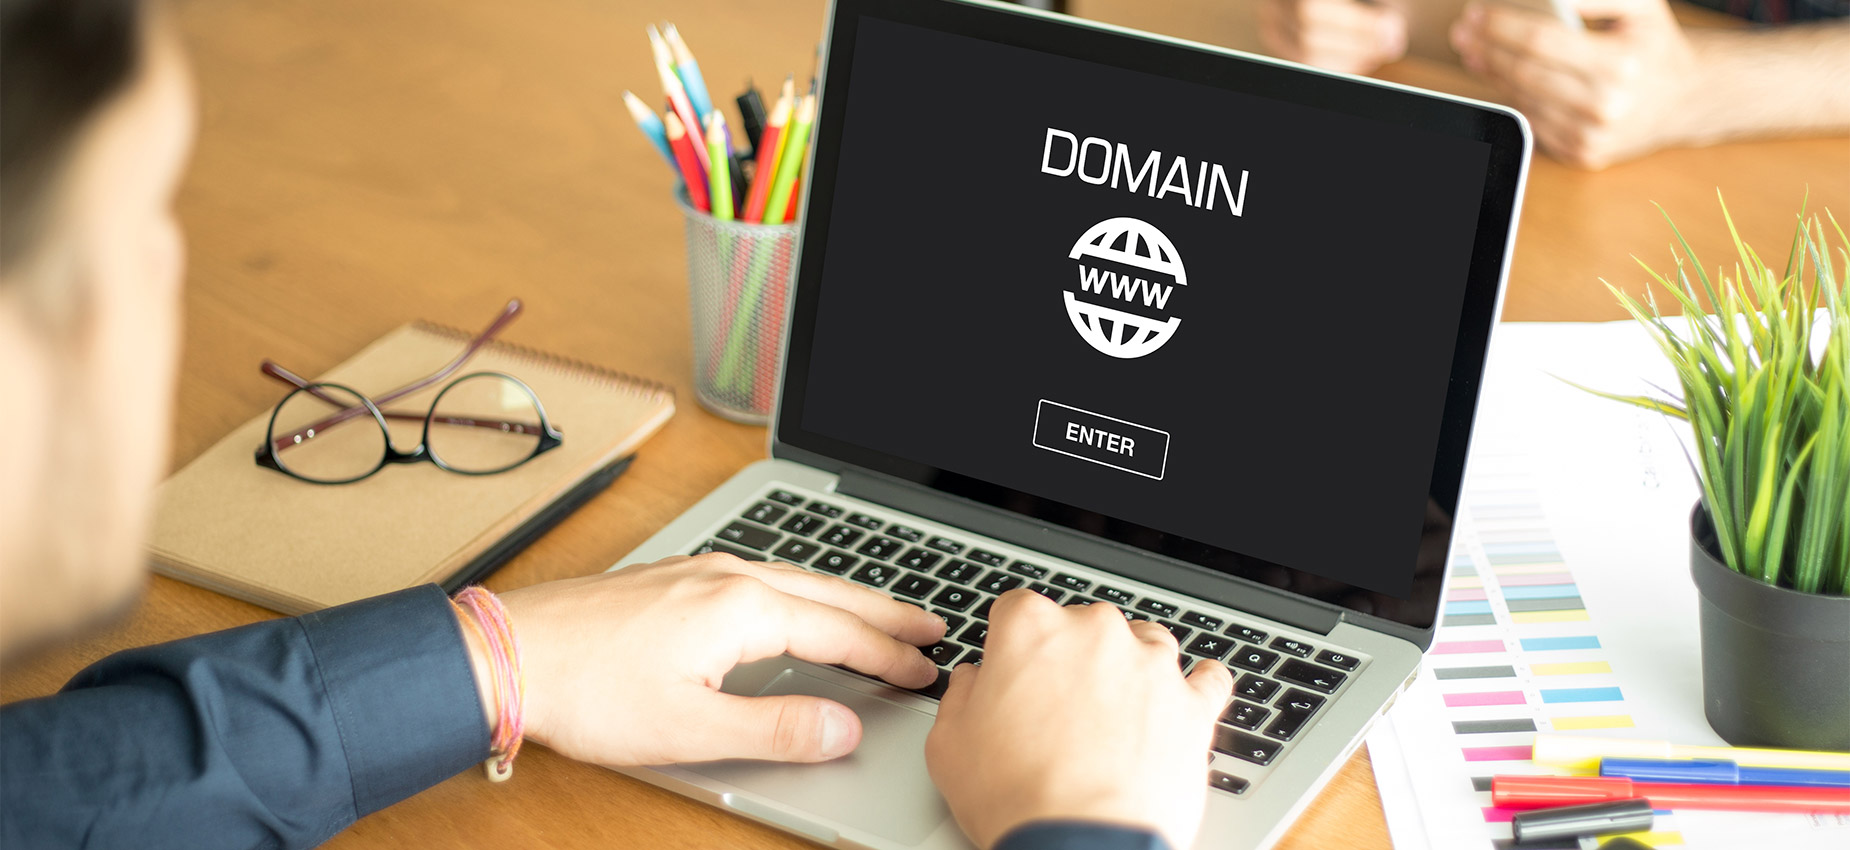 Digital Reputation Domain Registration